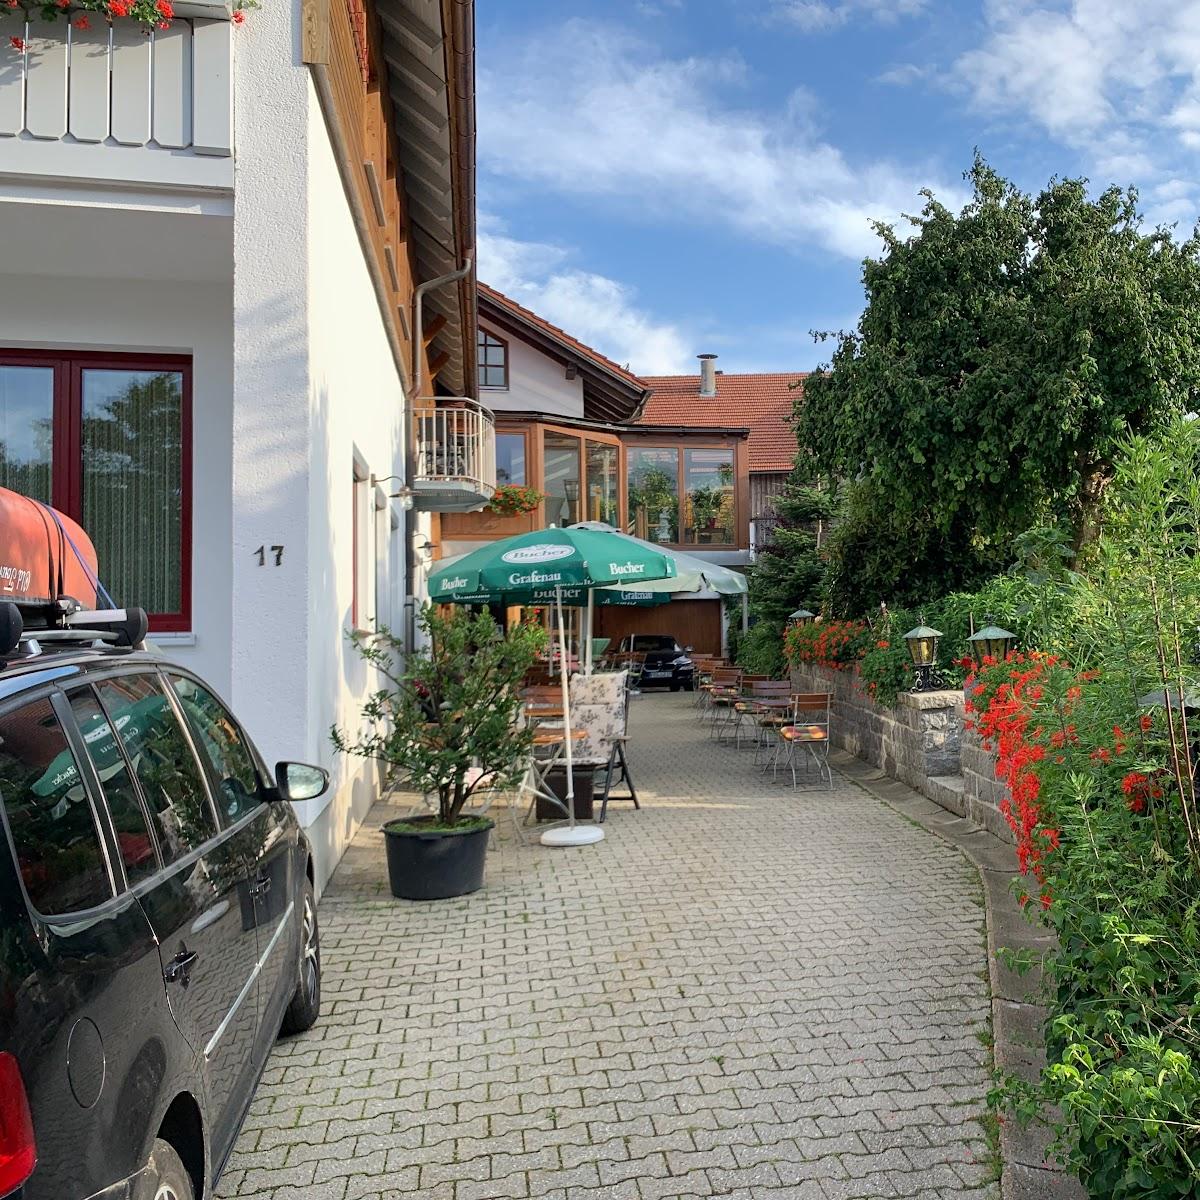 Restaurant "Landgasthof Lusenblick" in Grafenau